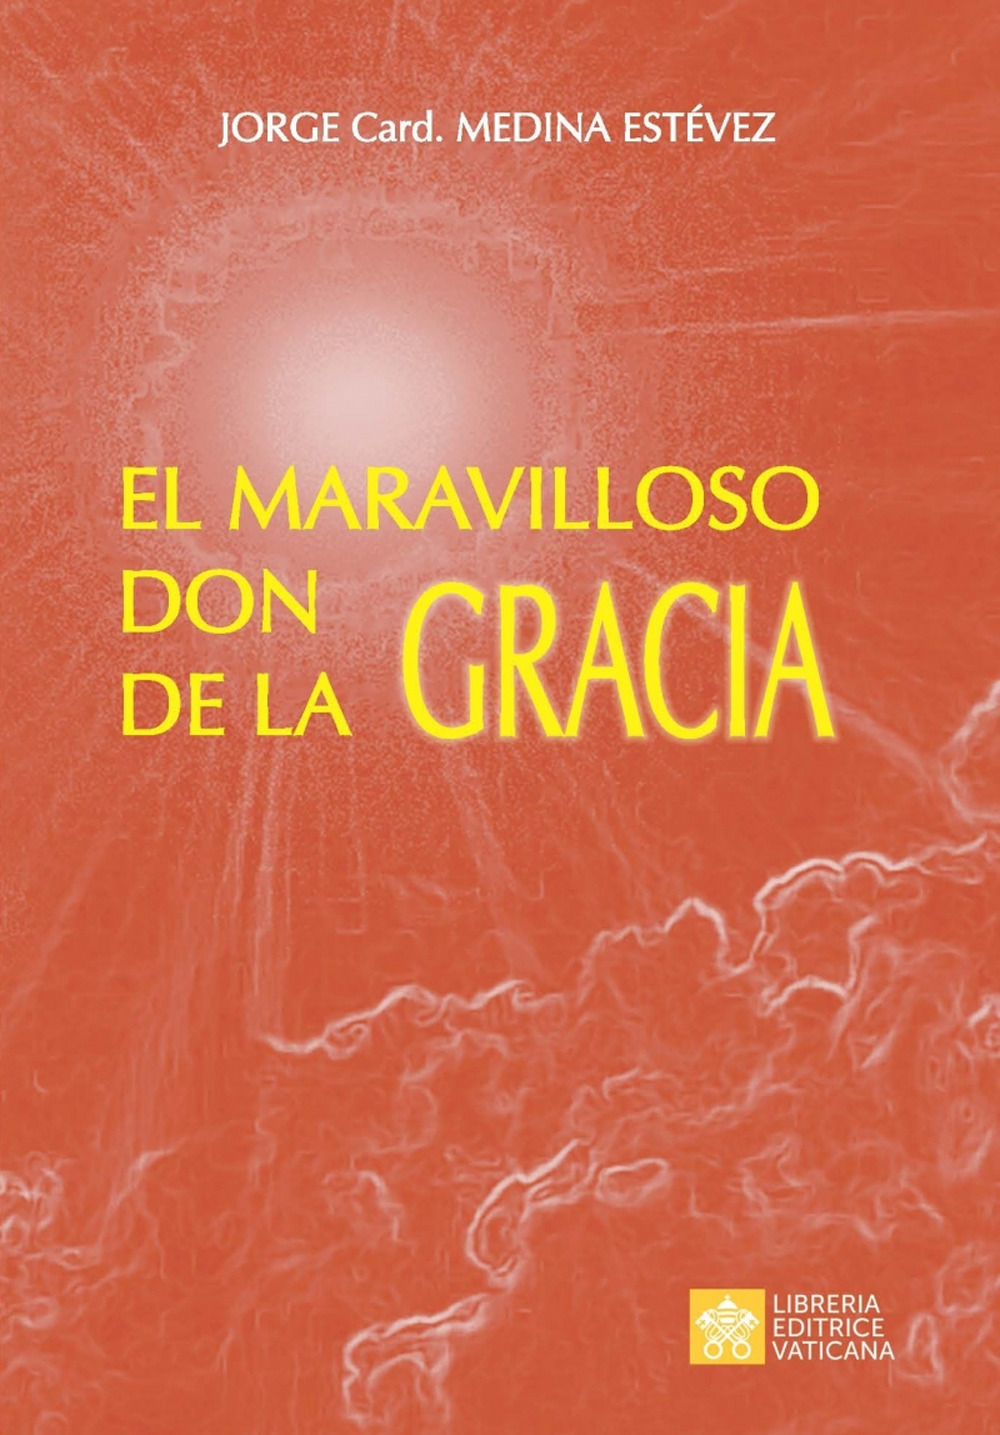 Image of El maravilloso don de la Gracia